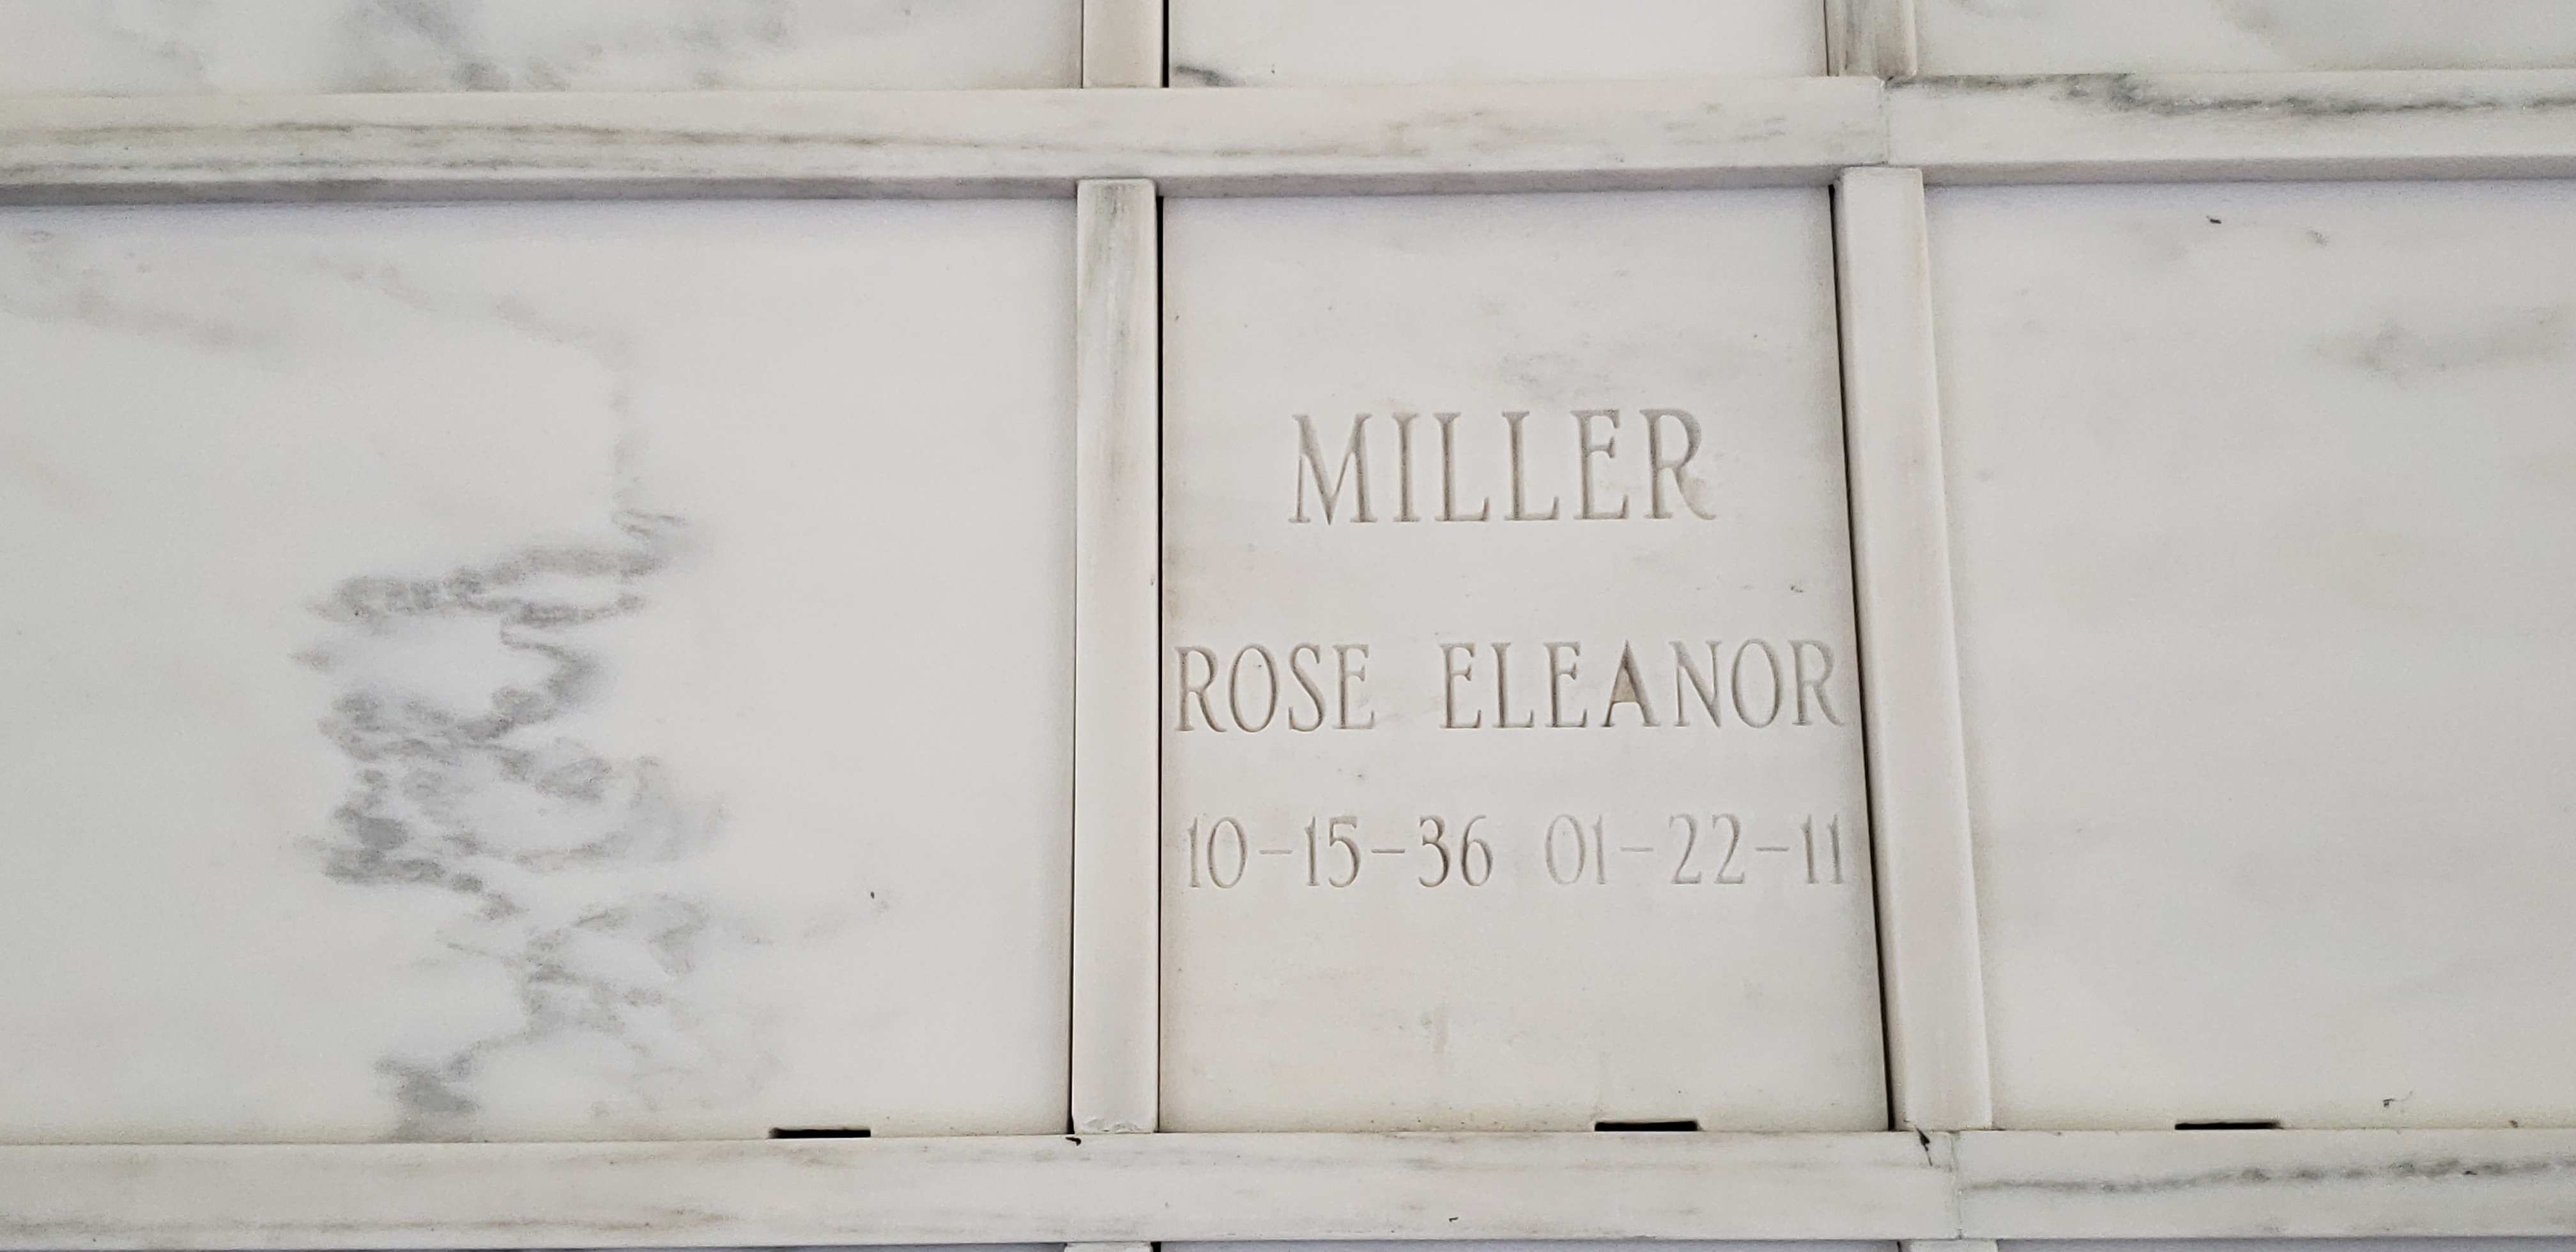 Rose Eleanor Miller